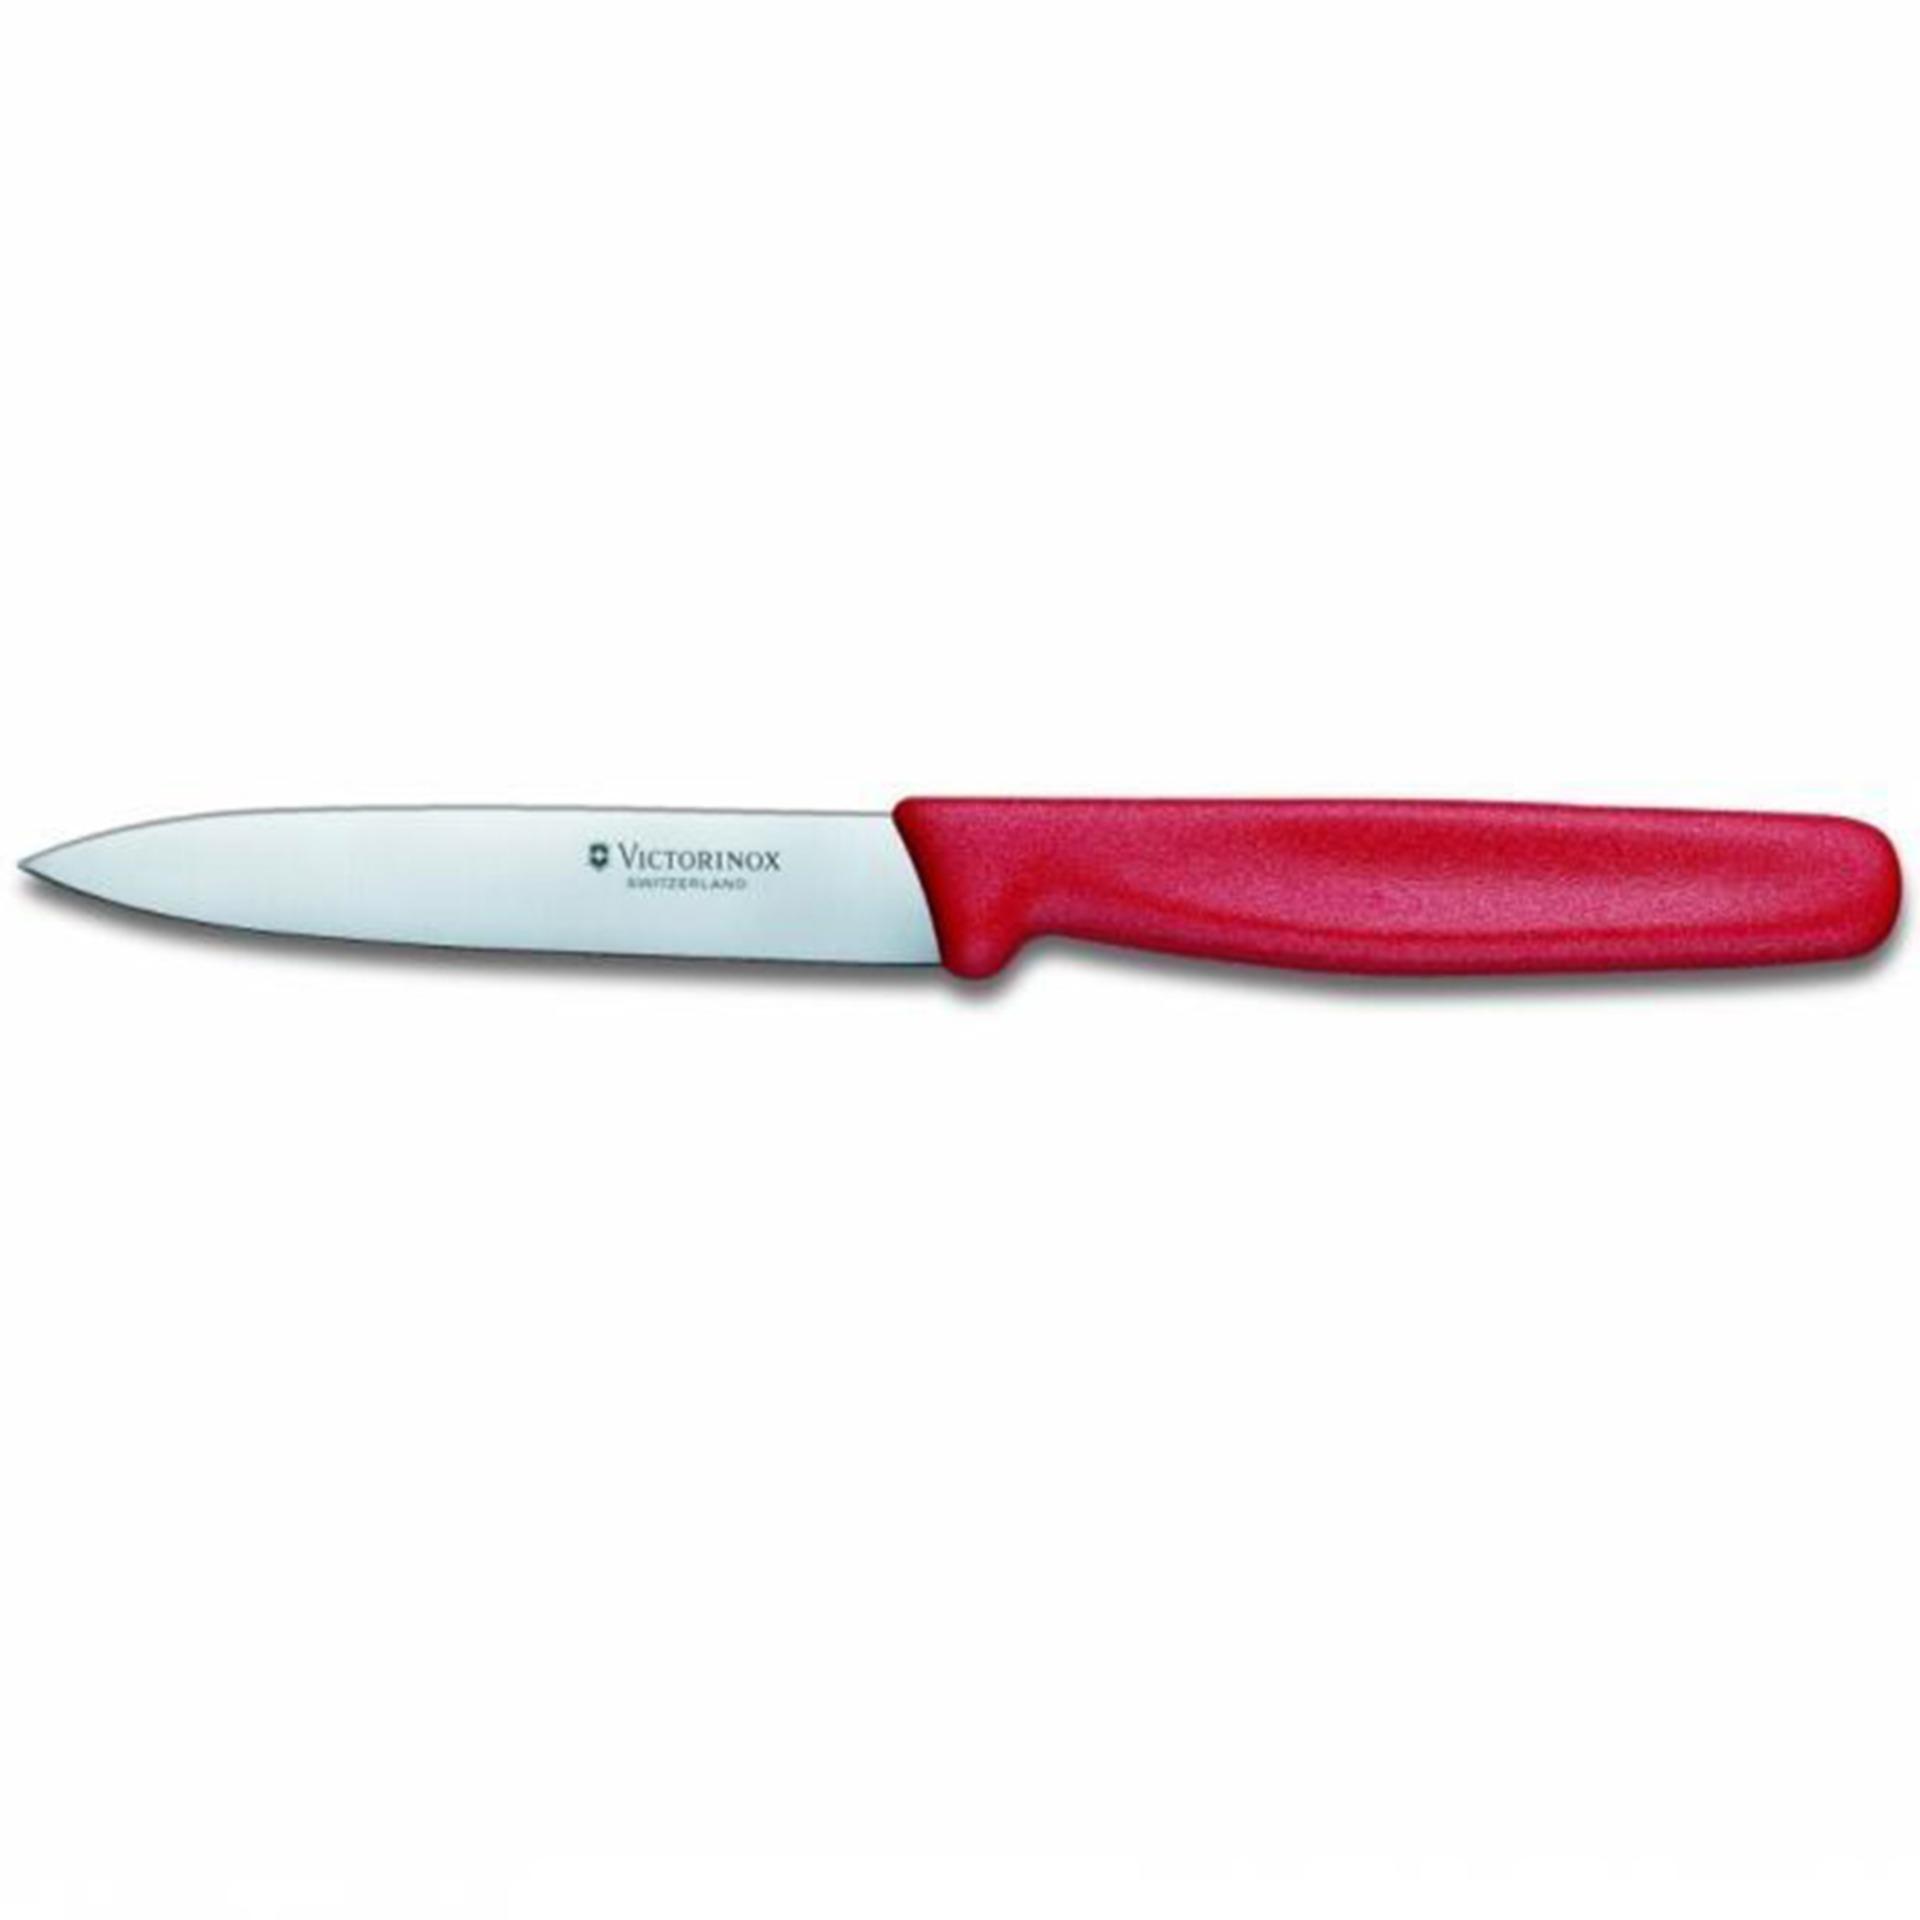 Paring Knife 10 Cm - Red